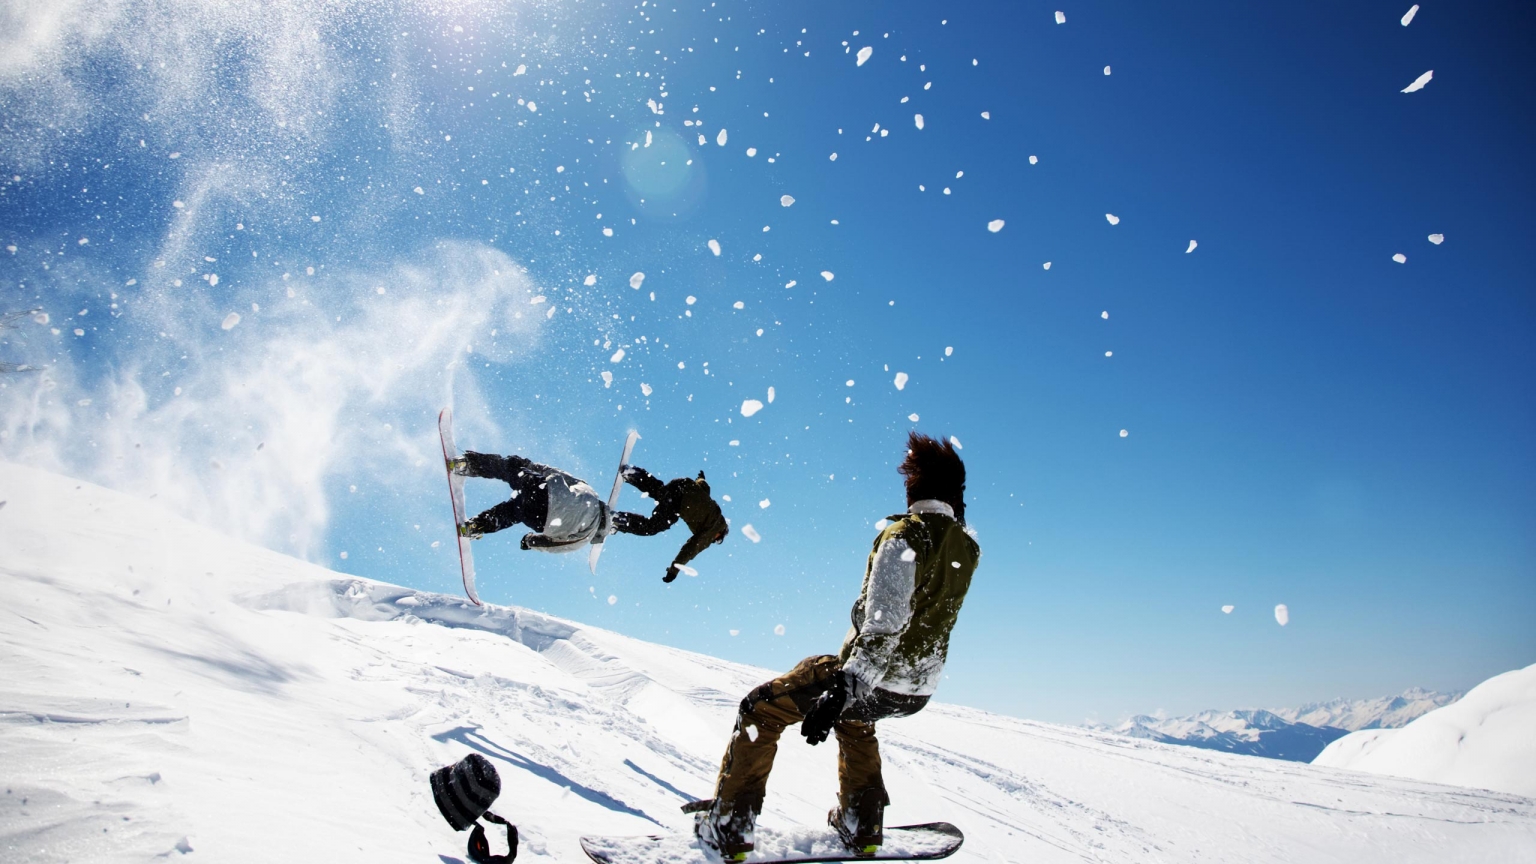 Winter Snowboarding for 1536 x 864 HDTV resolution